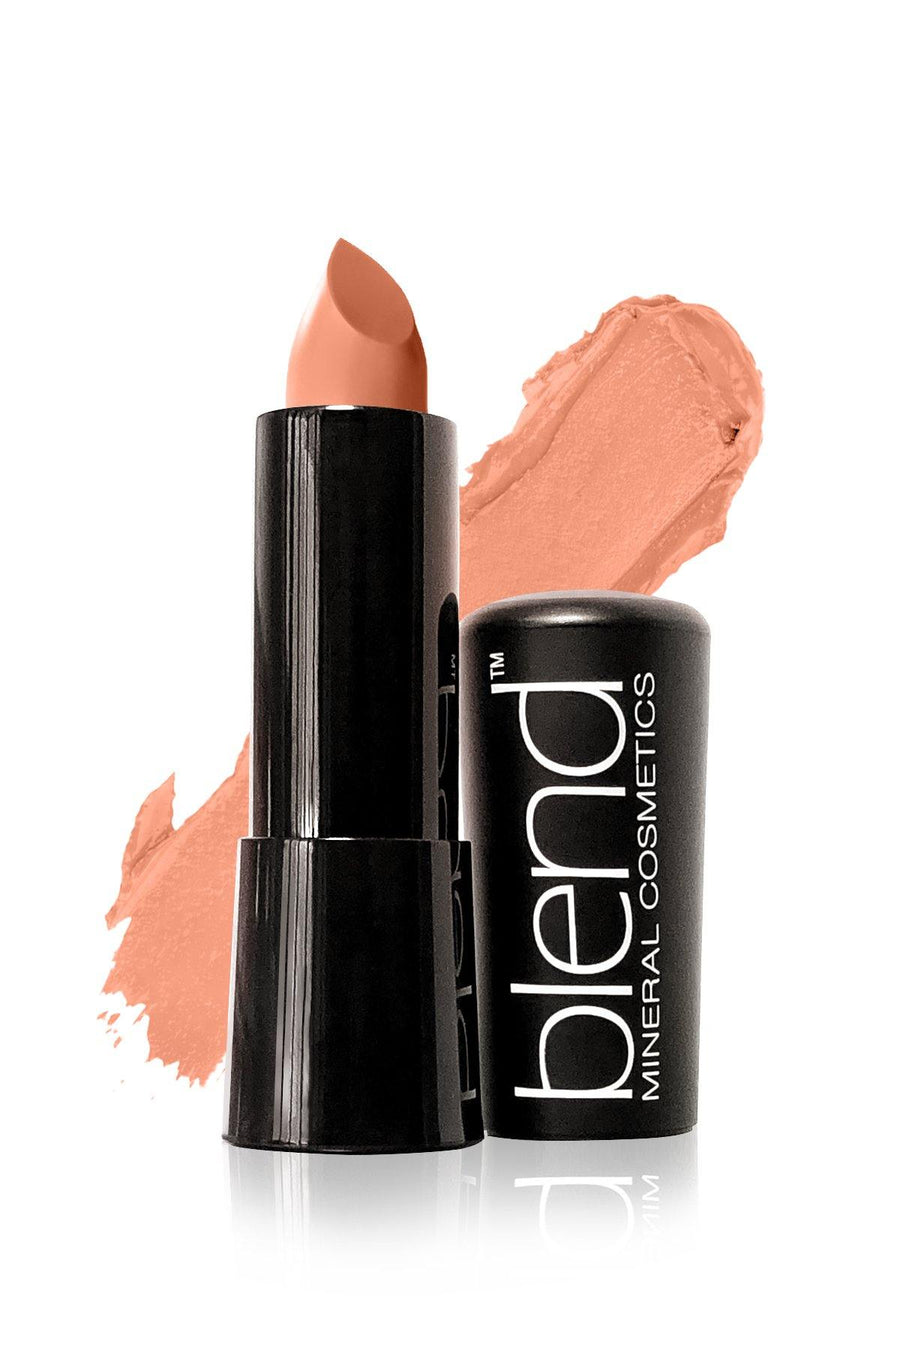 Matte Lipstick #27 - Apricot - Blend Mineral Cosmetics